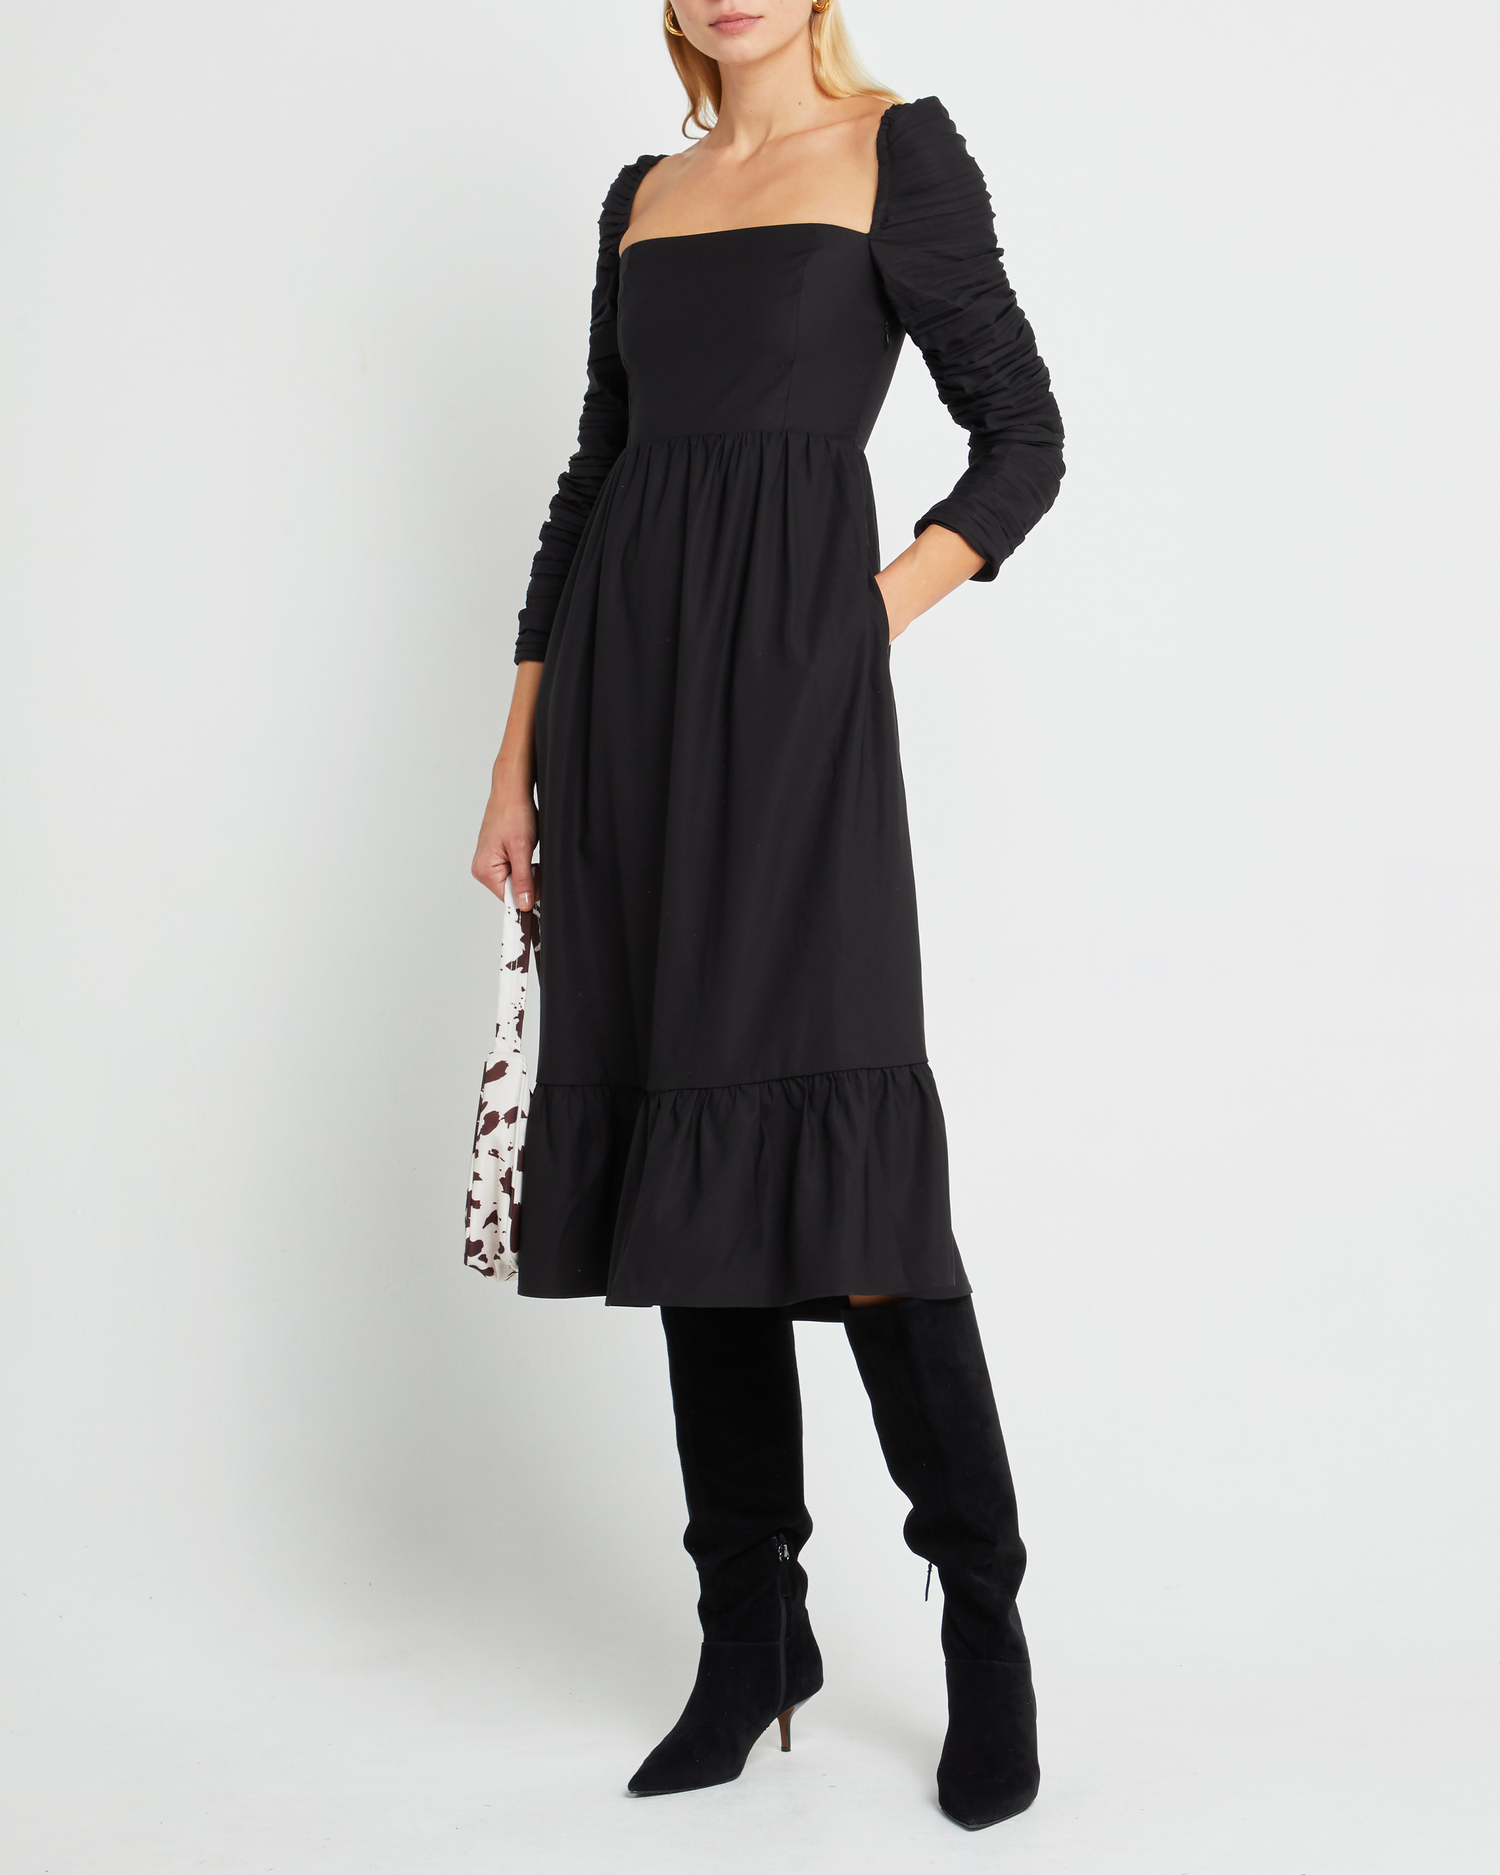 Fourth image of Bonnie Dress, a black midi dress, midi sleeves, 3/4 sleeves, square neckline, pockets, ruched